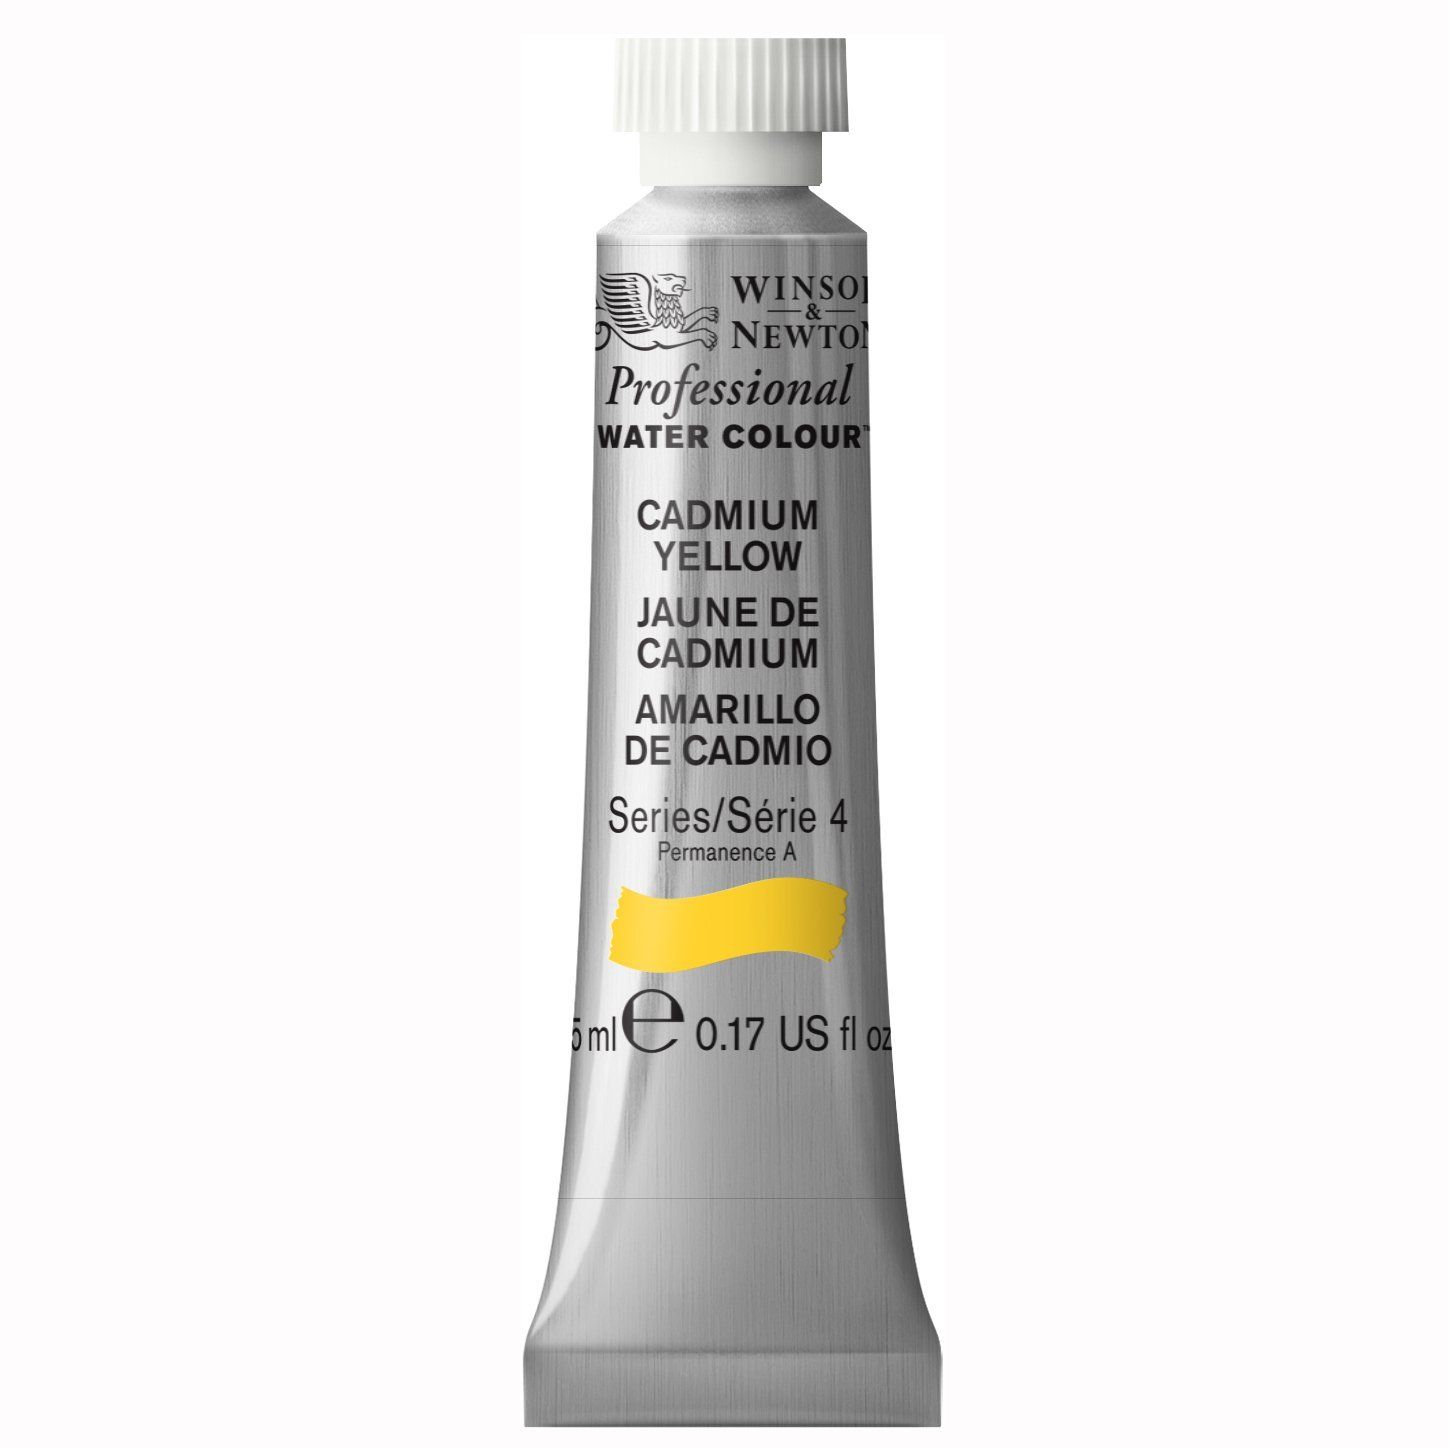 Winsor & Newton Watercolour Paint - Cadmium Yellow 5ml